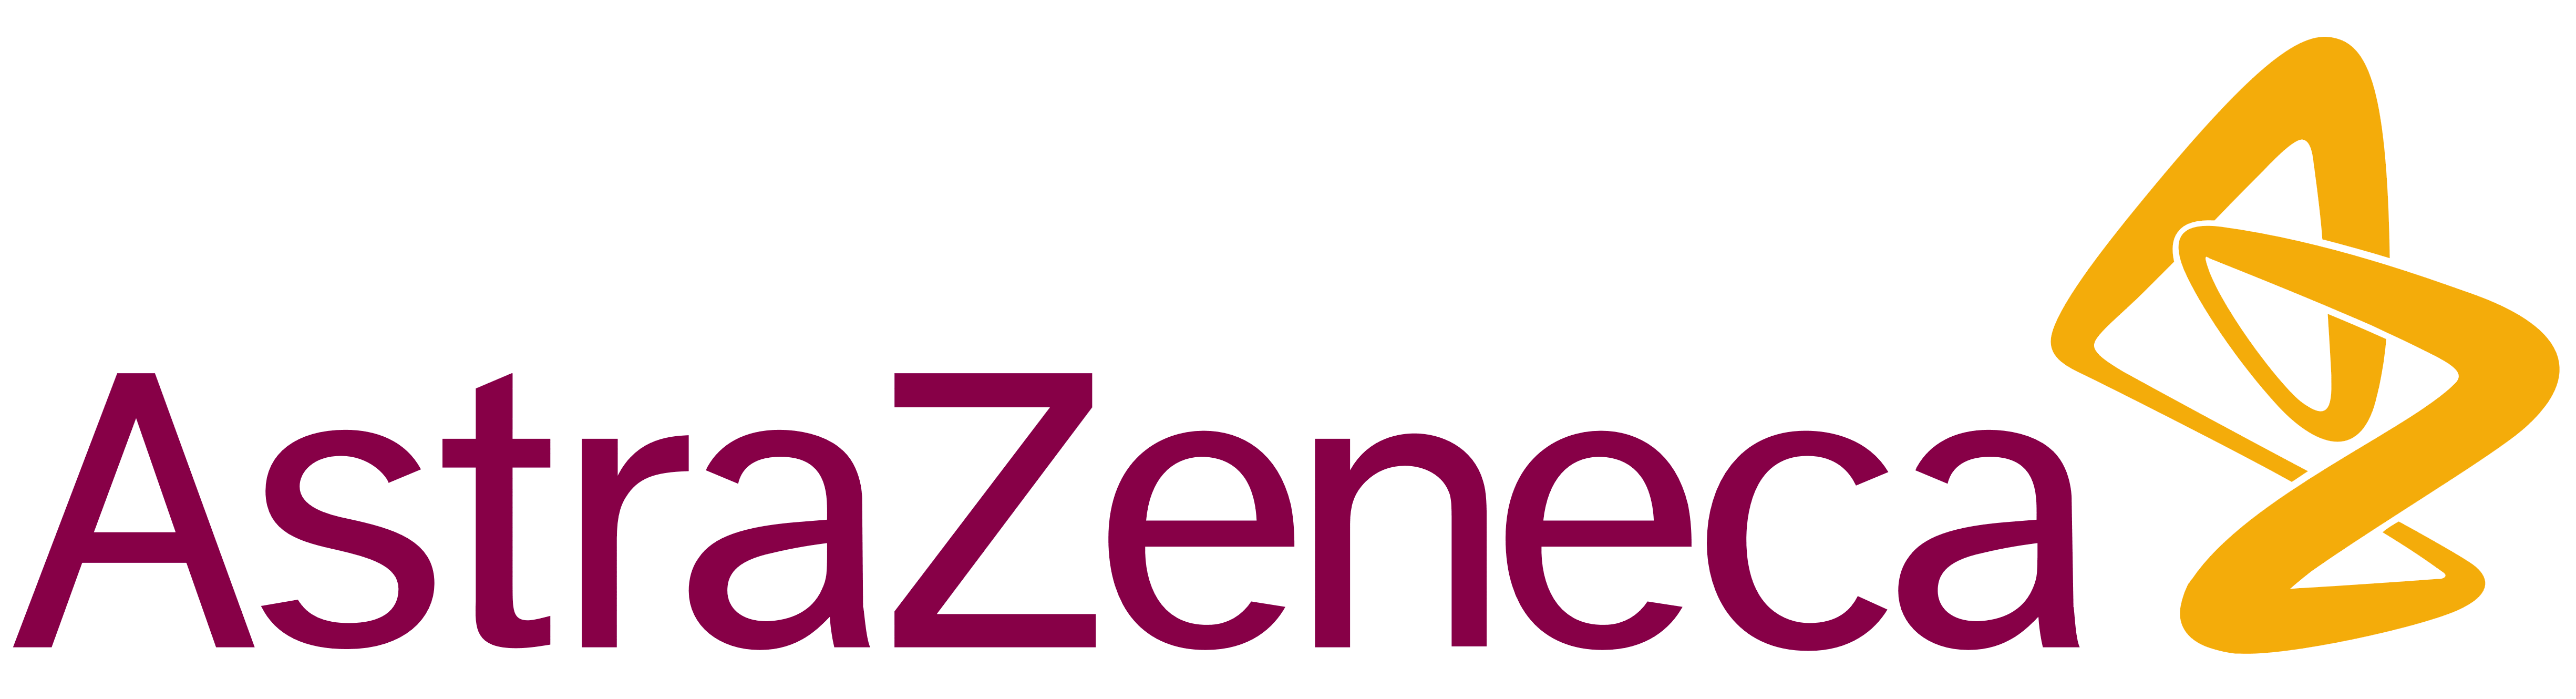 AstraZeneca logo vector .